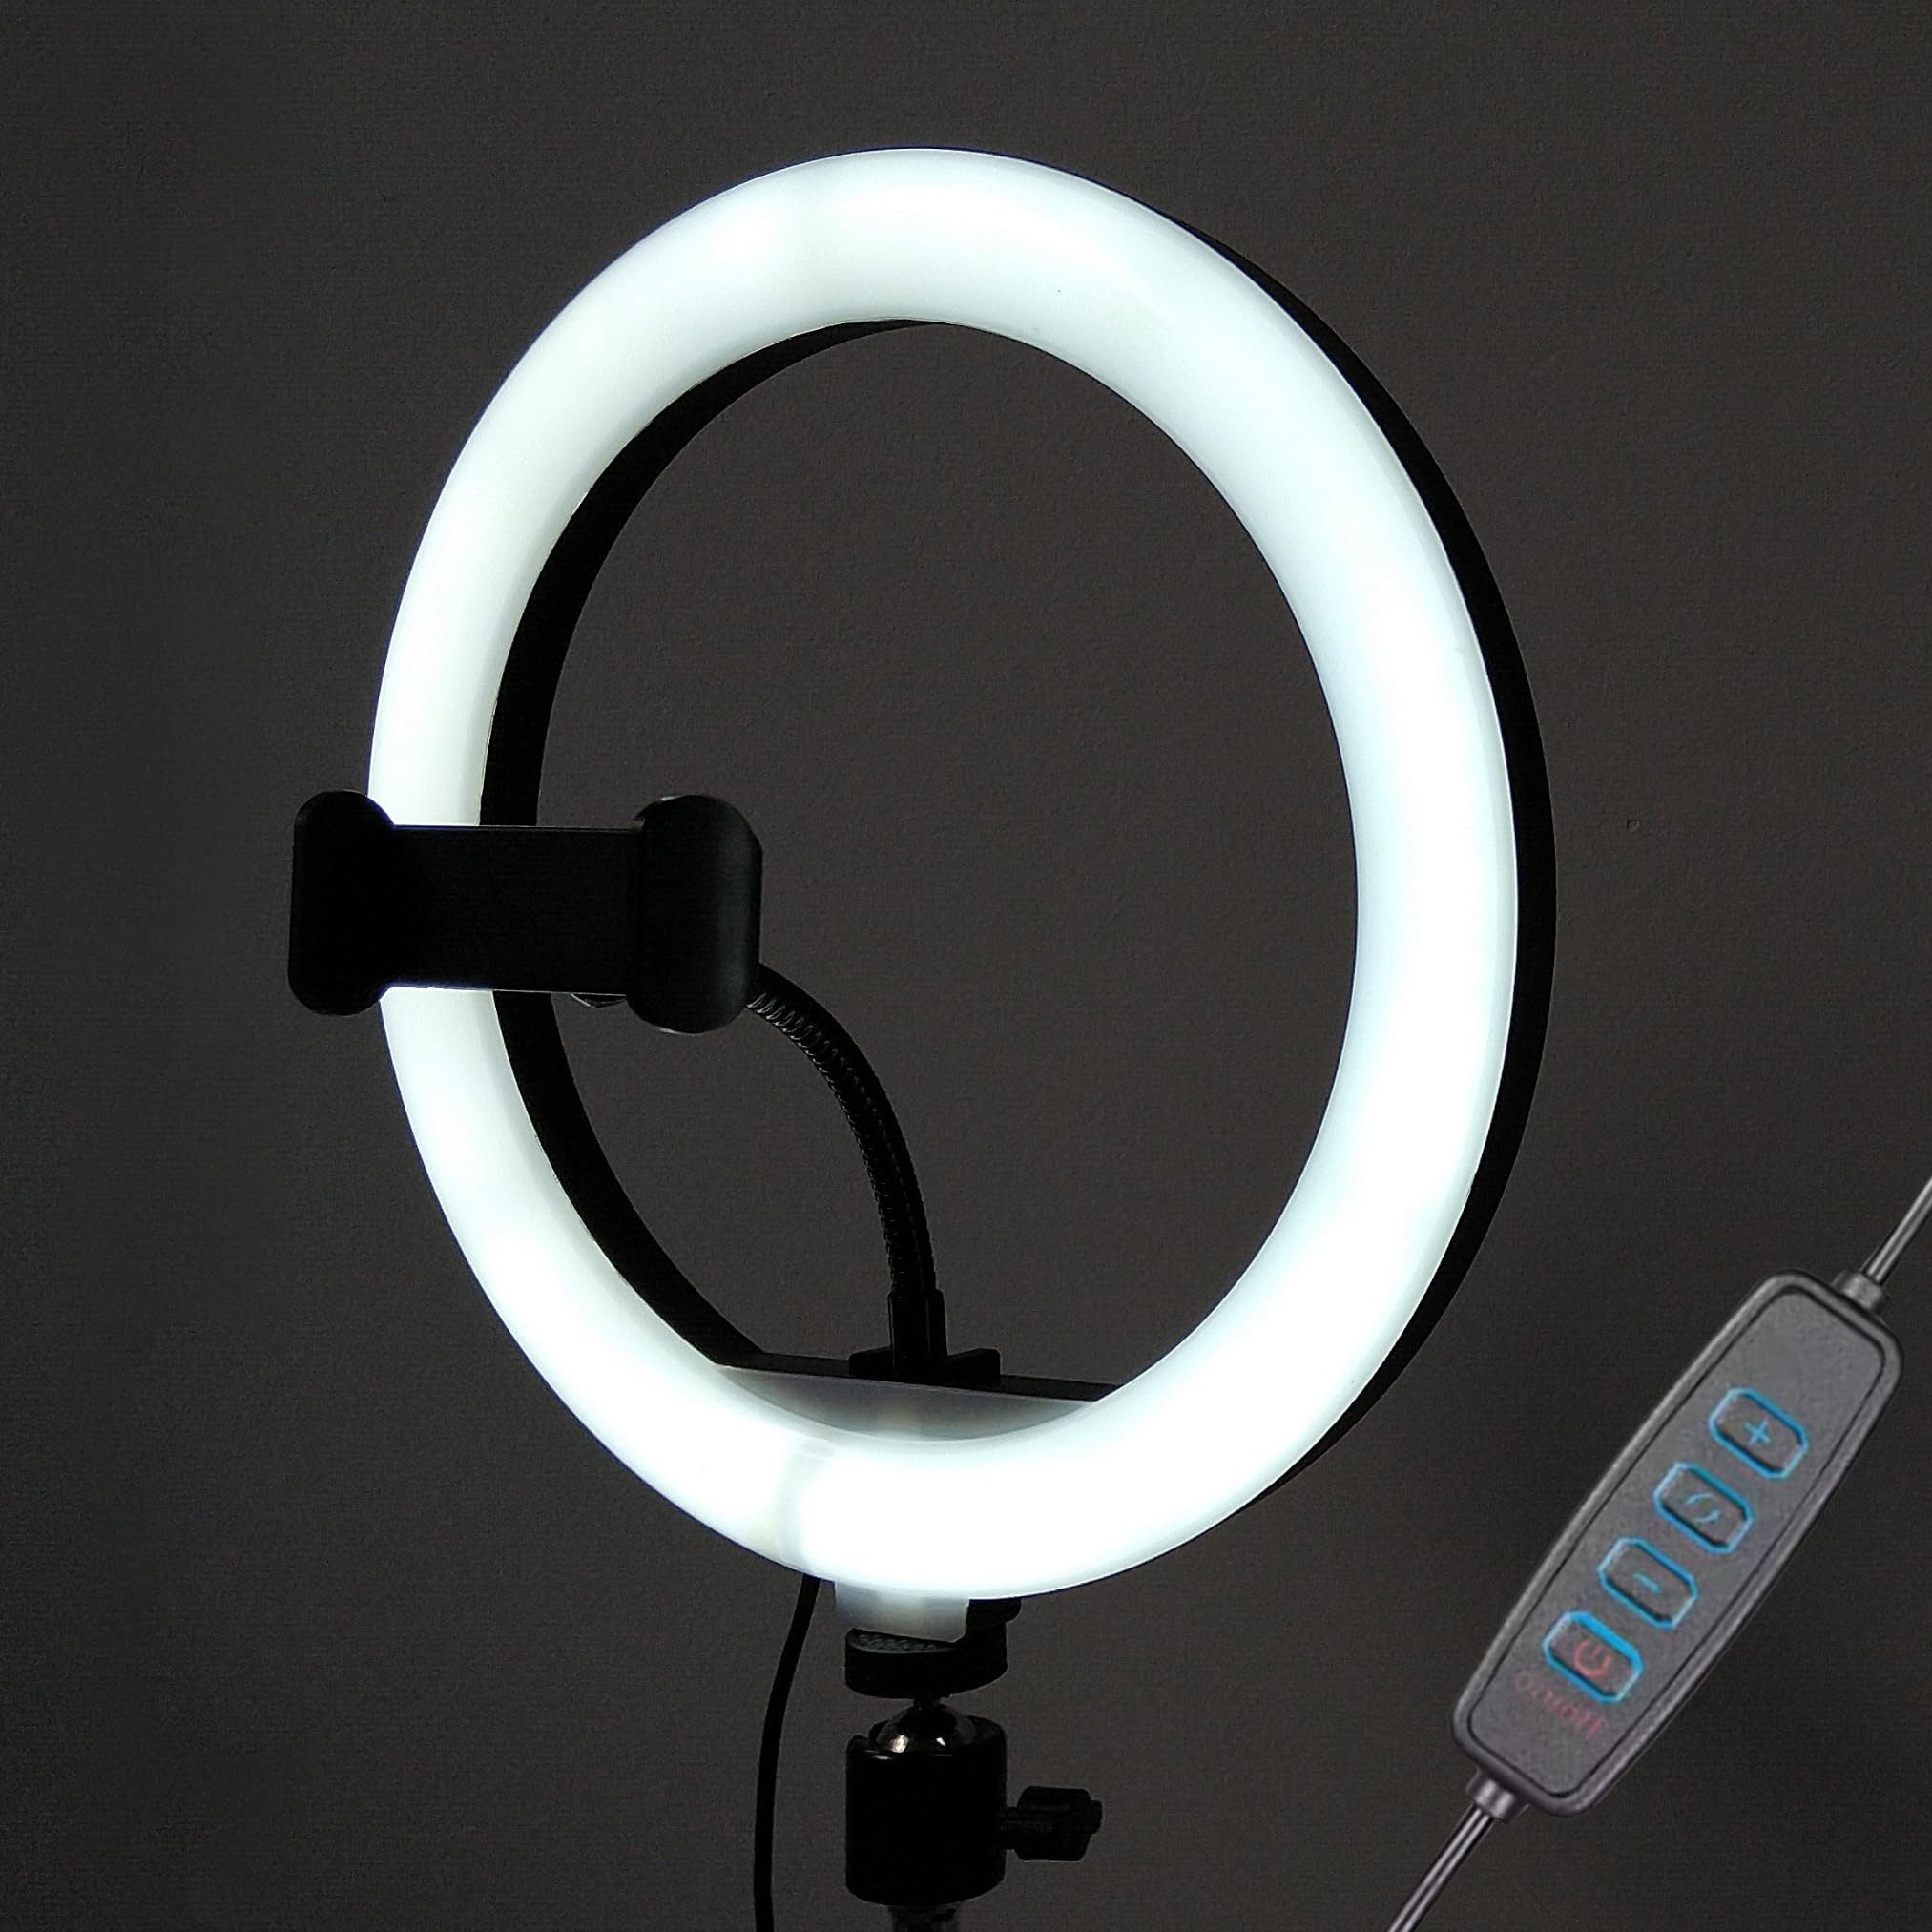 TronicXL Ringlicht Großes Ringlight 10 Zoll ohne Stativ Handy Licht Beauty Lampe Foto, mit Kugelkopf für Smartphones iPhones Videos Streaming Schminken